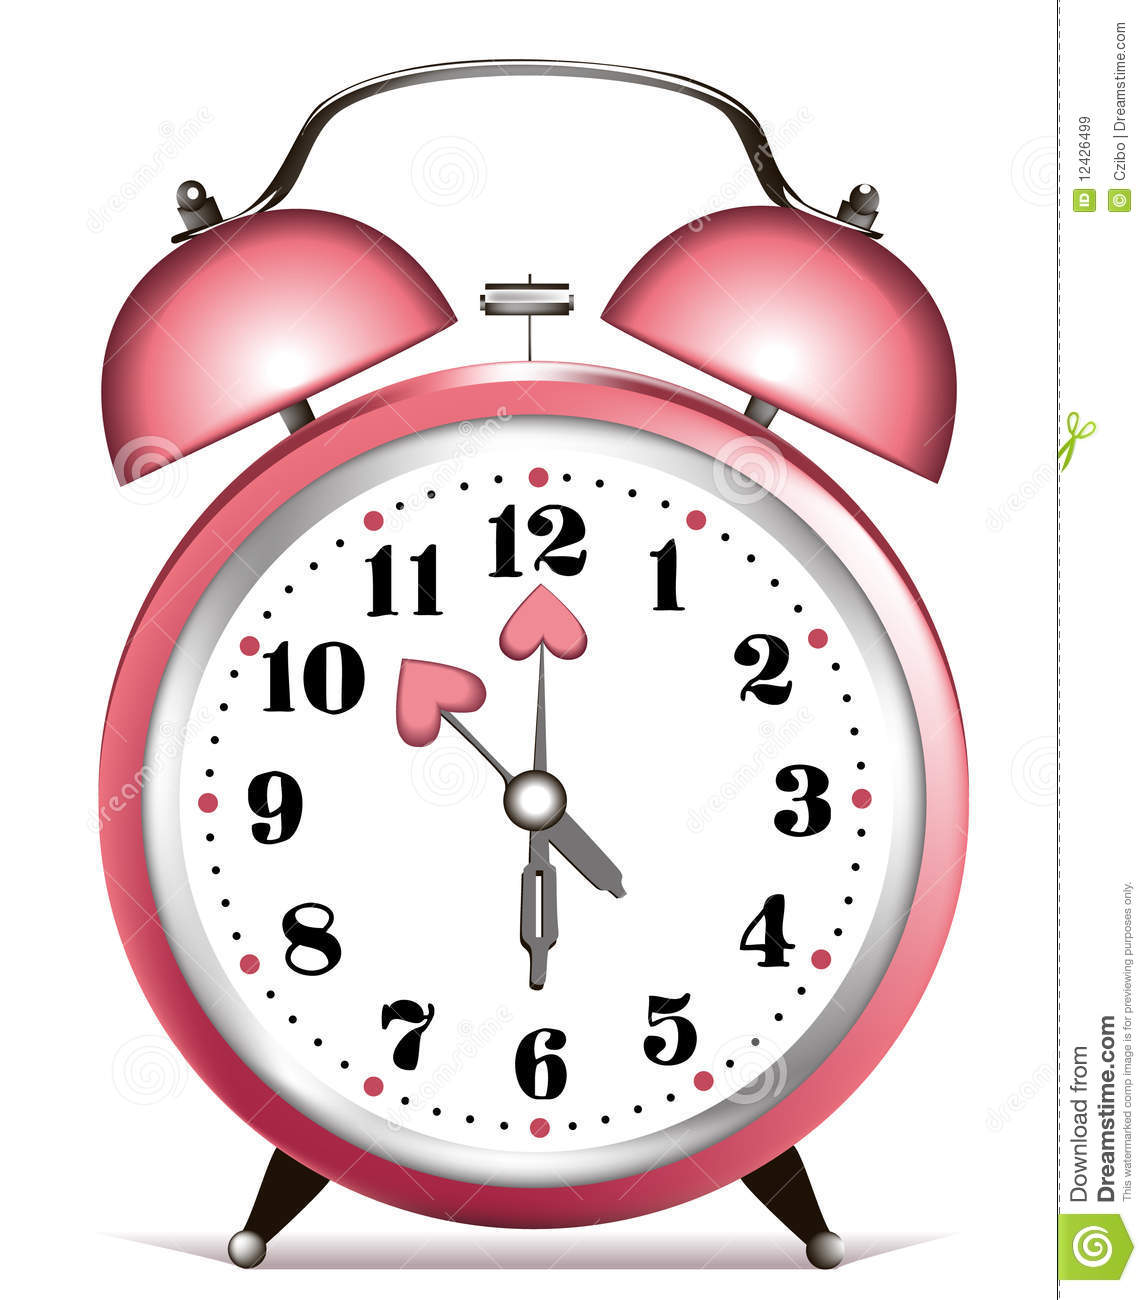 Valentine Alarm Clock Royalty Free Stock Images   Image  12426499